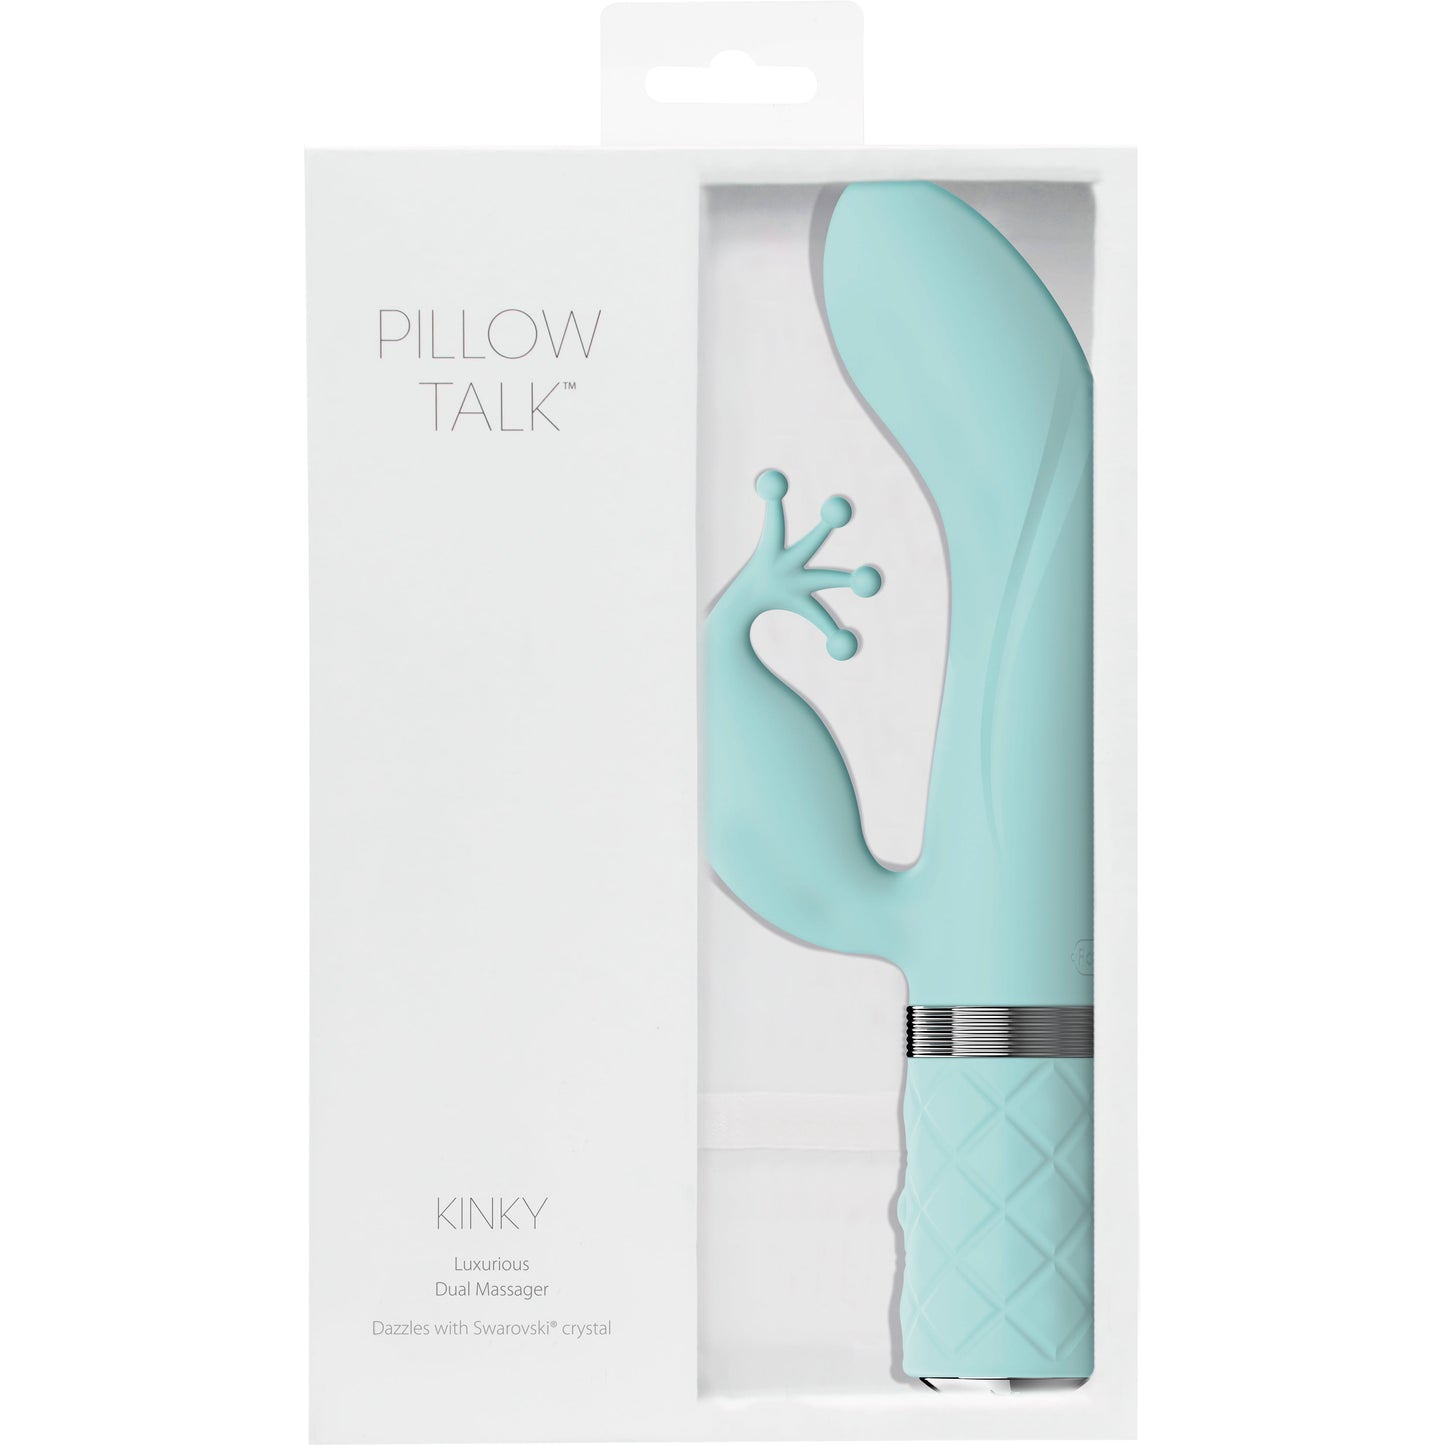 Pillow Talk Kinky - Teal